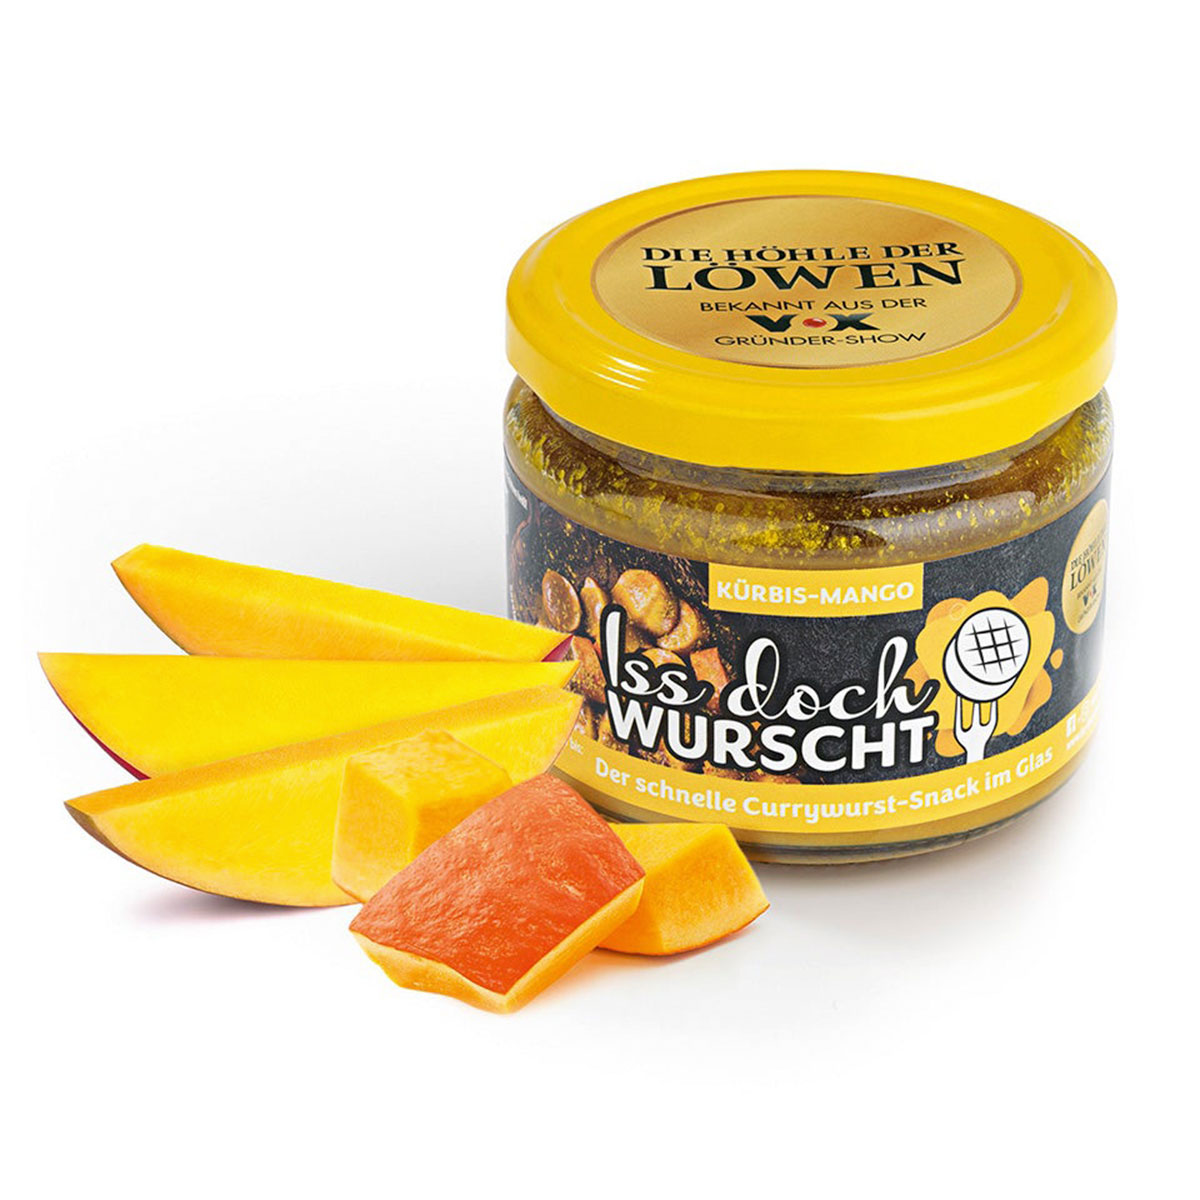 Currywurst-Snack Kürbis-Mango - Iss Doch Wurscht, 250g